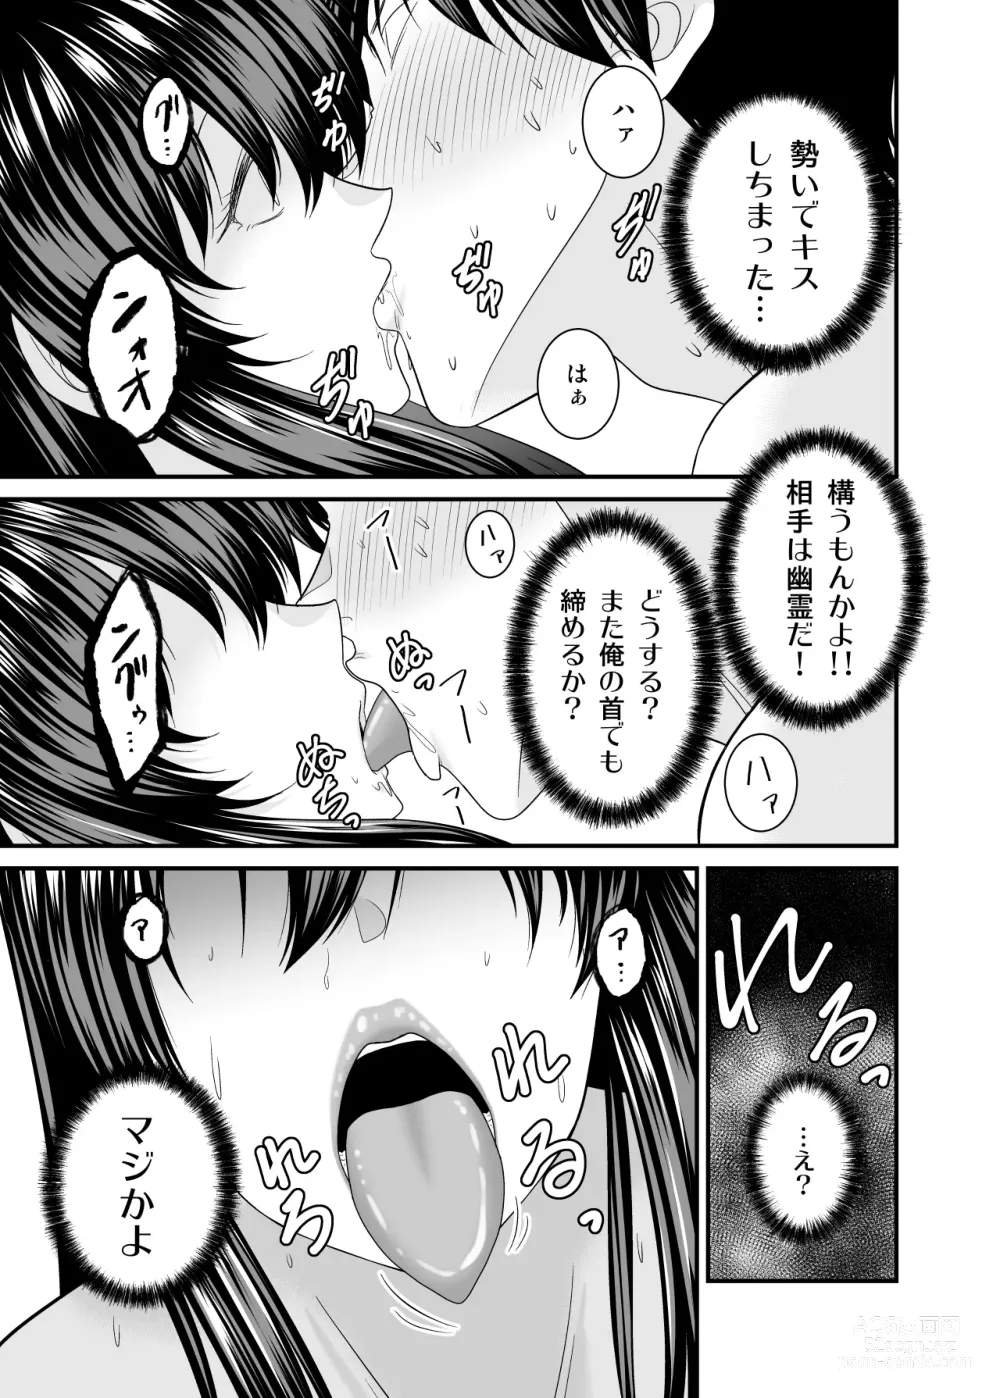 Page 22 of doujinshi ヤバい事故物件に女幽霊が出たけど無職底辺の俺はセックスしまくる